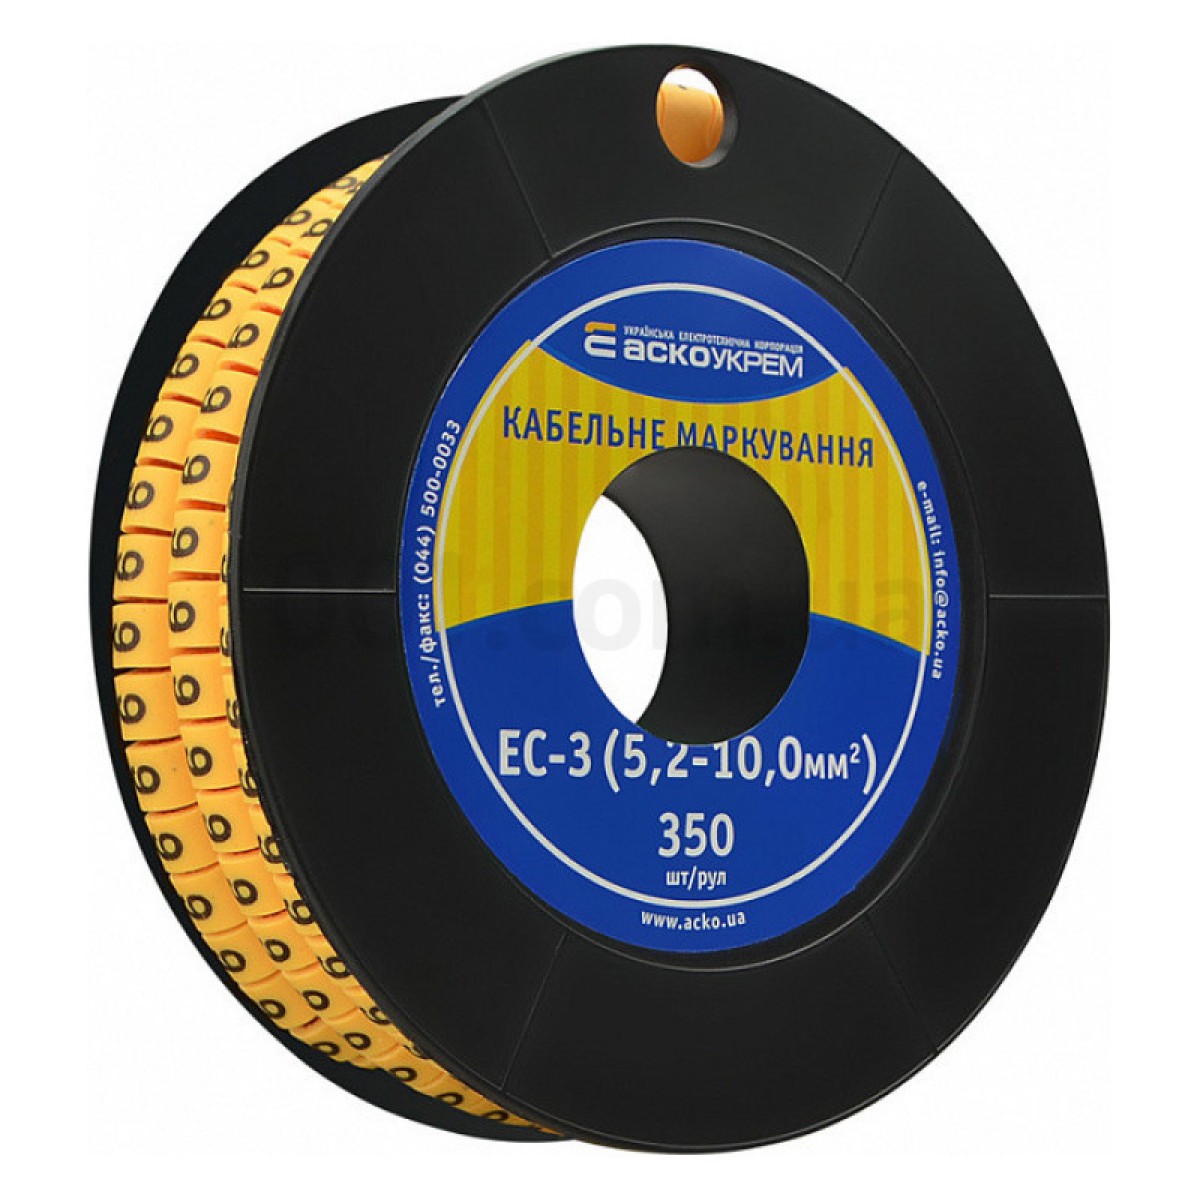 Маркировка EC-3 для кабеля 5,2-10,0 мм² символ «6» (рулон 250 шт.), АСКО-УКРЕМ 98_98.jpg - фото 1